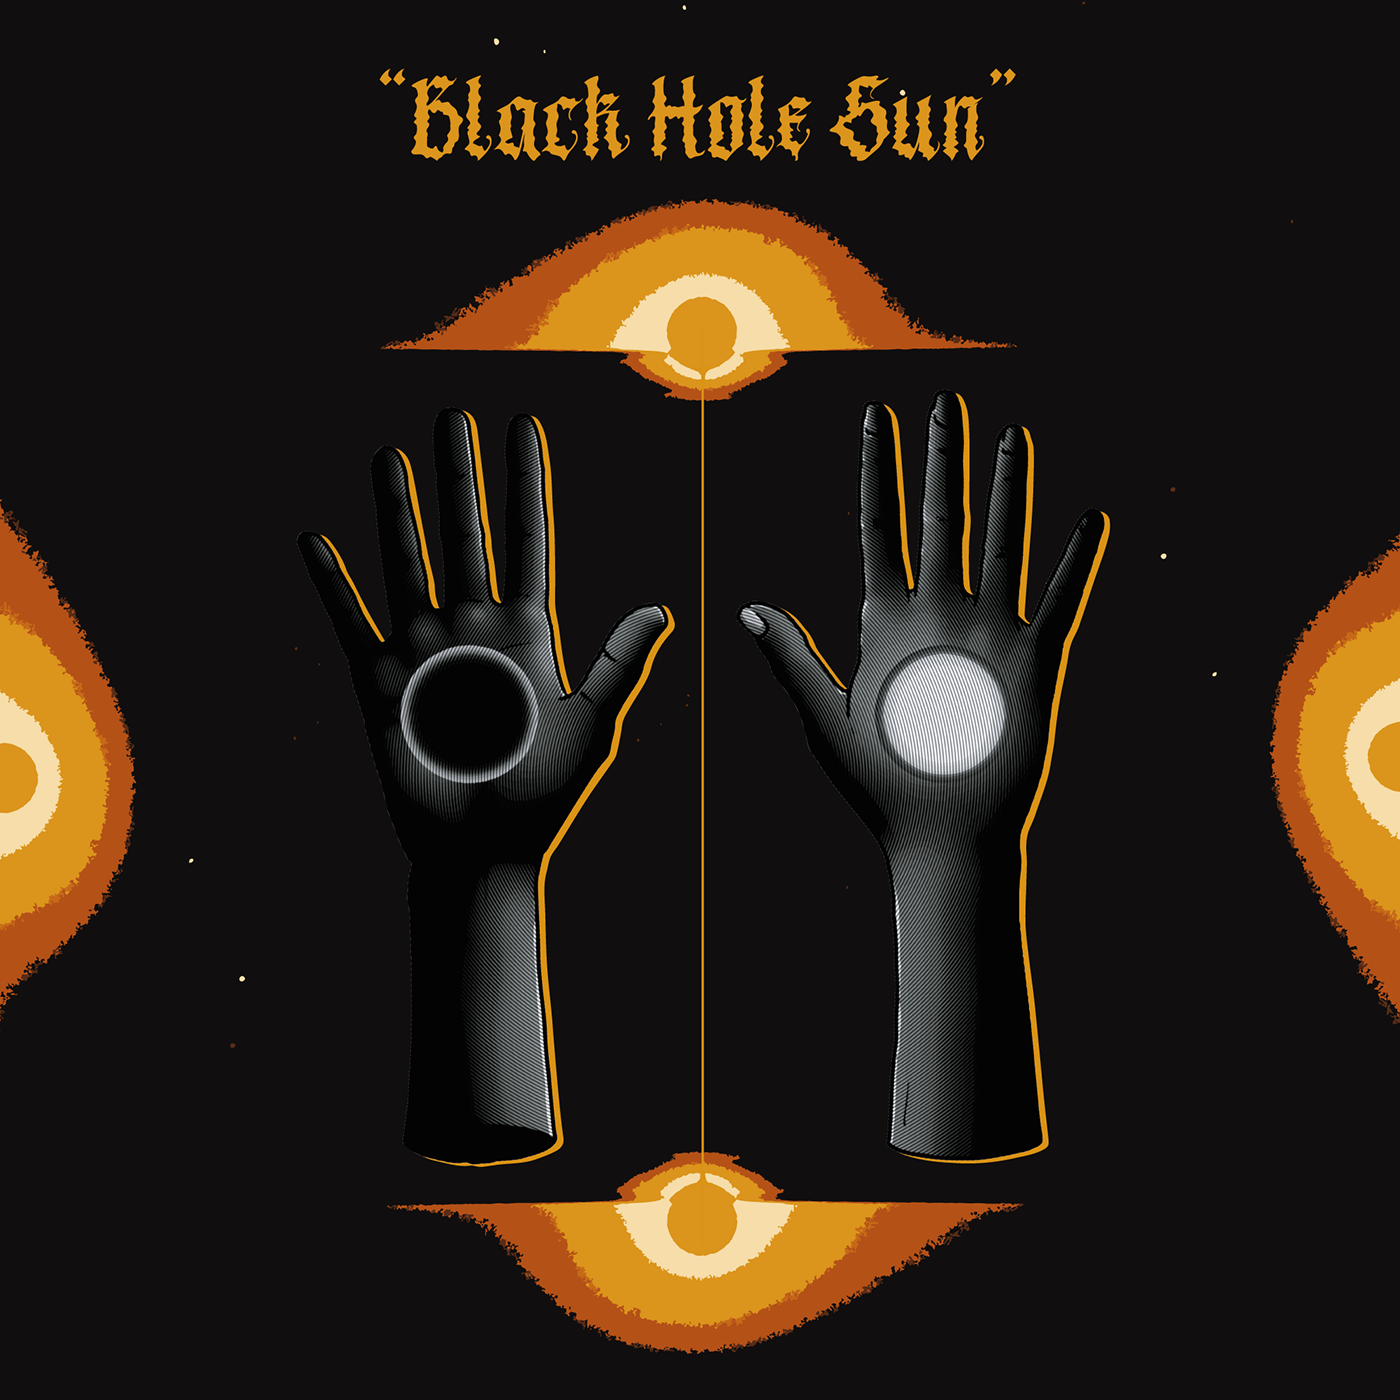 soundgarden black hole sun hole grunge artwork rock ILLUSTRATION  #band blackhole blackholesun